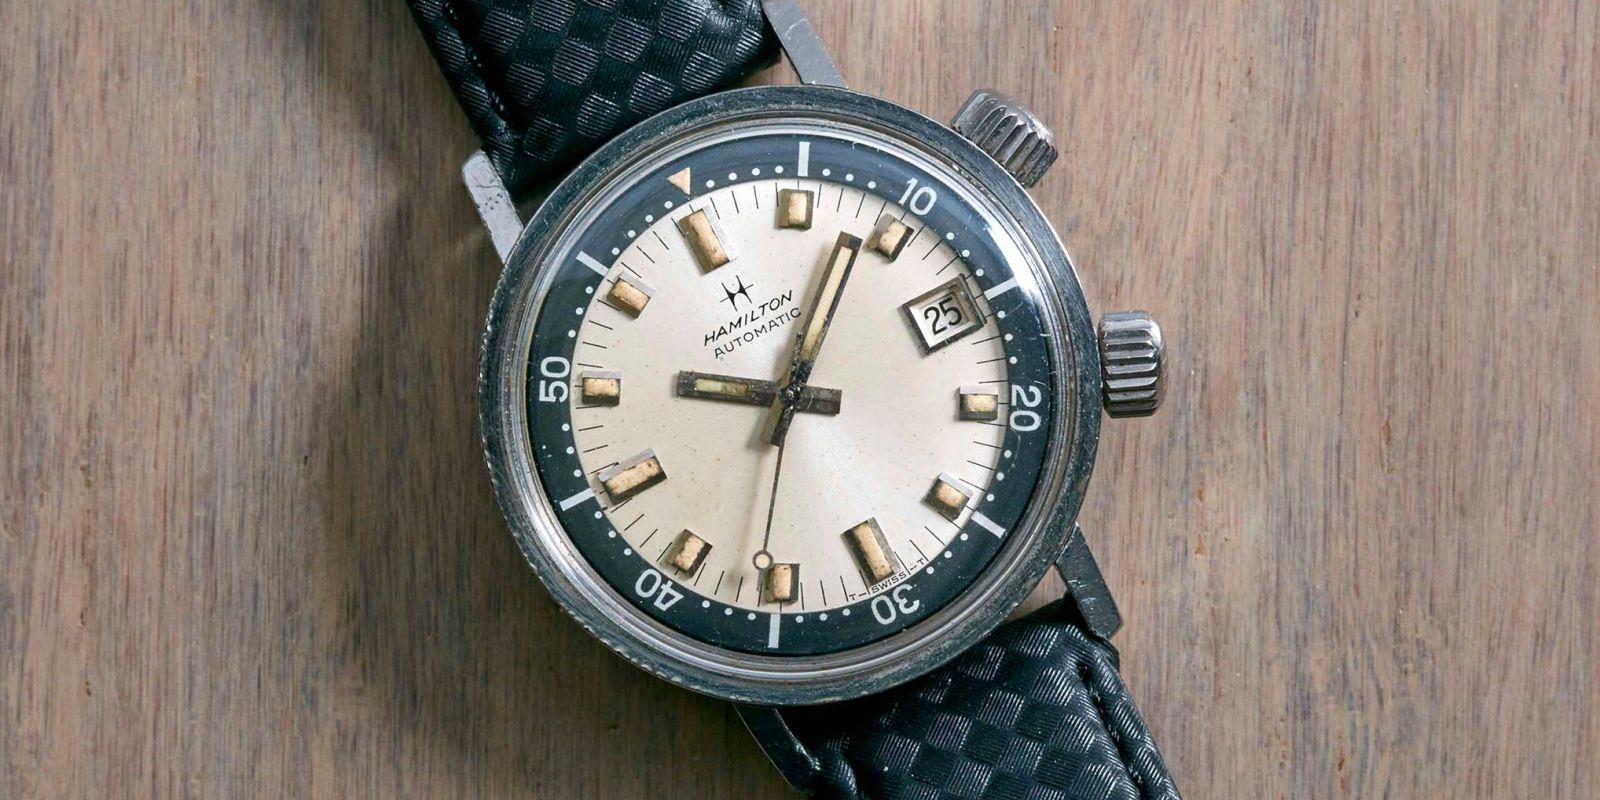 Used Watch Buyer Old Watch Buyer in West Patel Nagar,Delhi - Best Second  Hand Wrist Watch Dealers in Delhi - Justdial